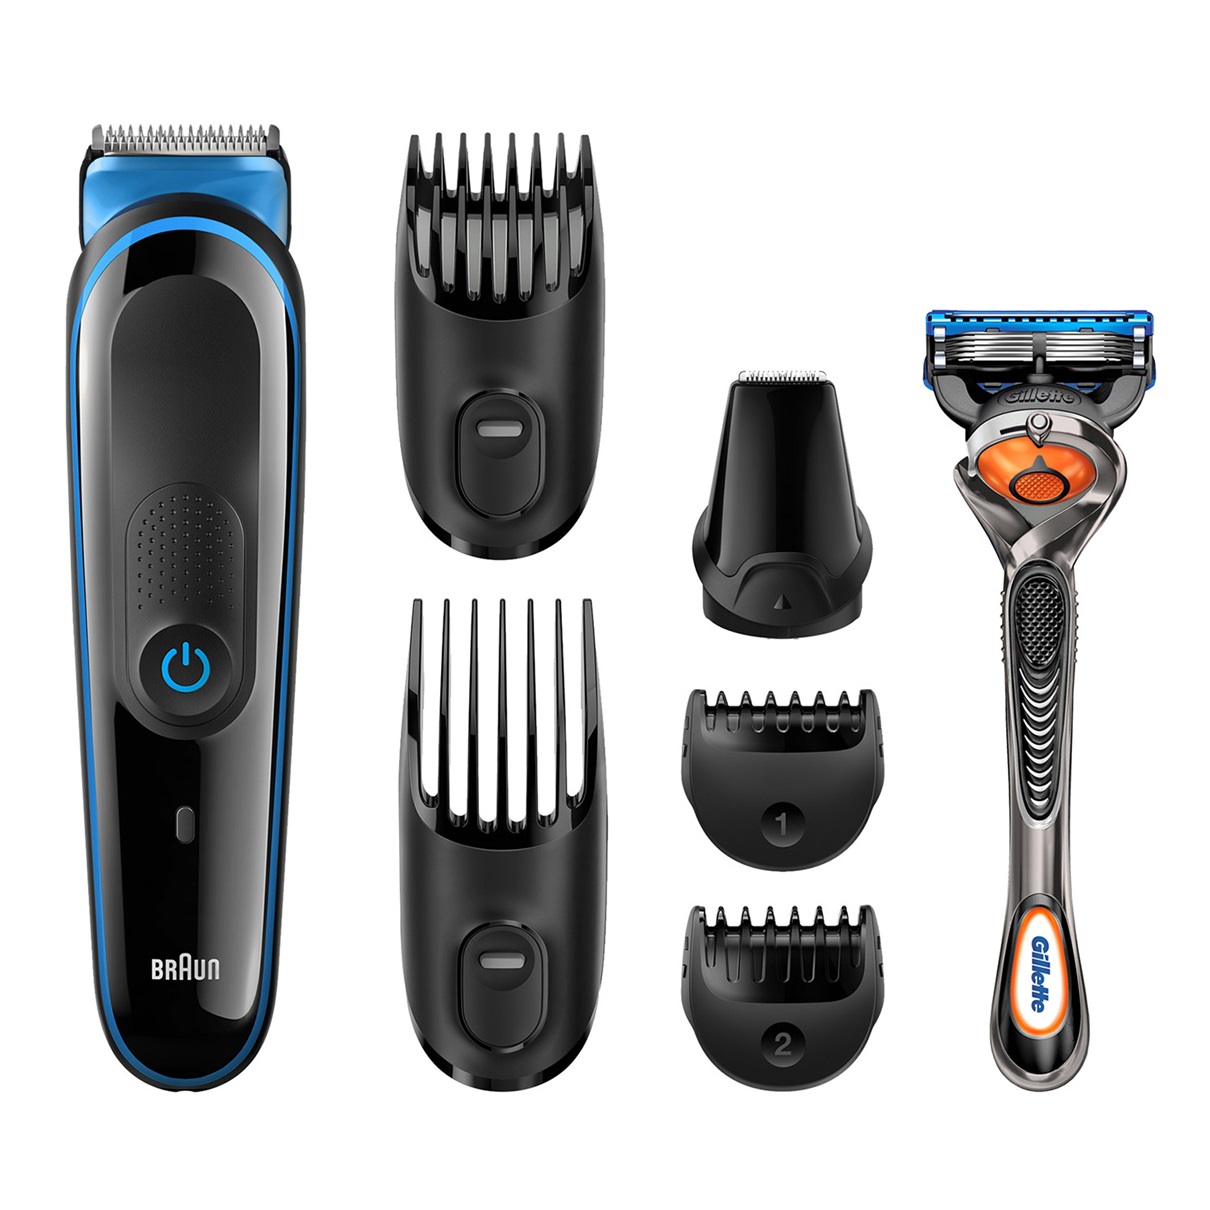 Braun multi grooming kit MGK3045